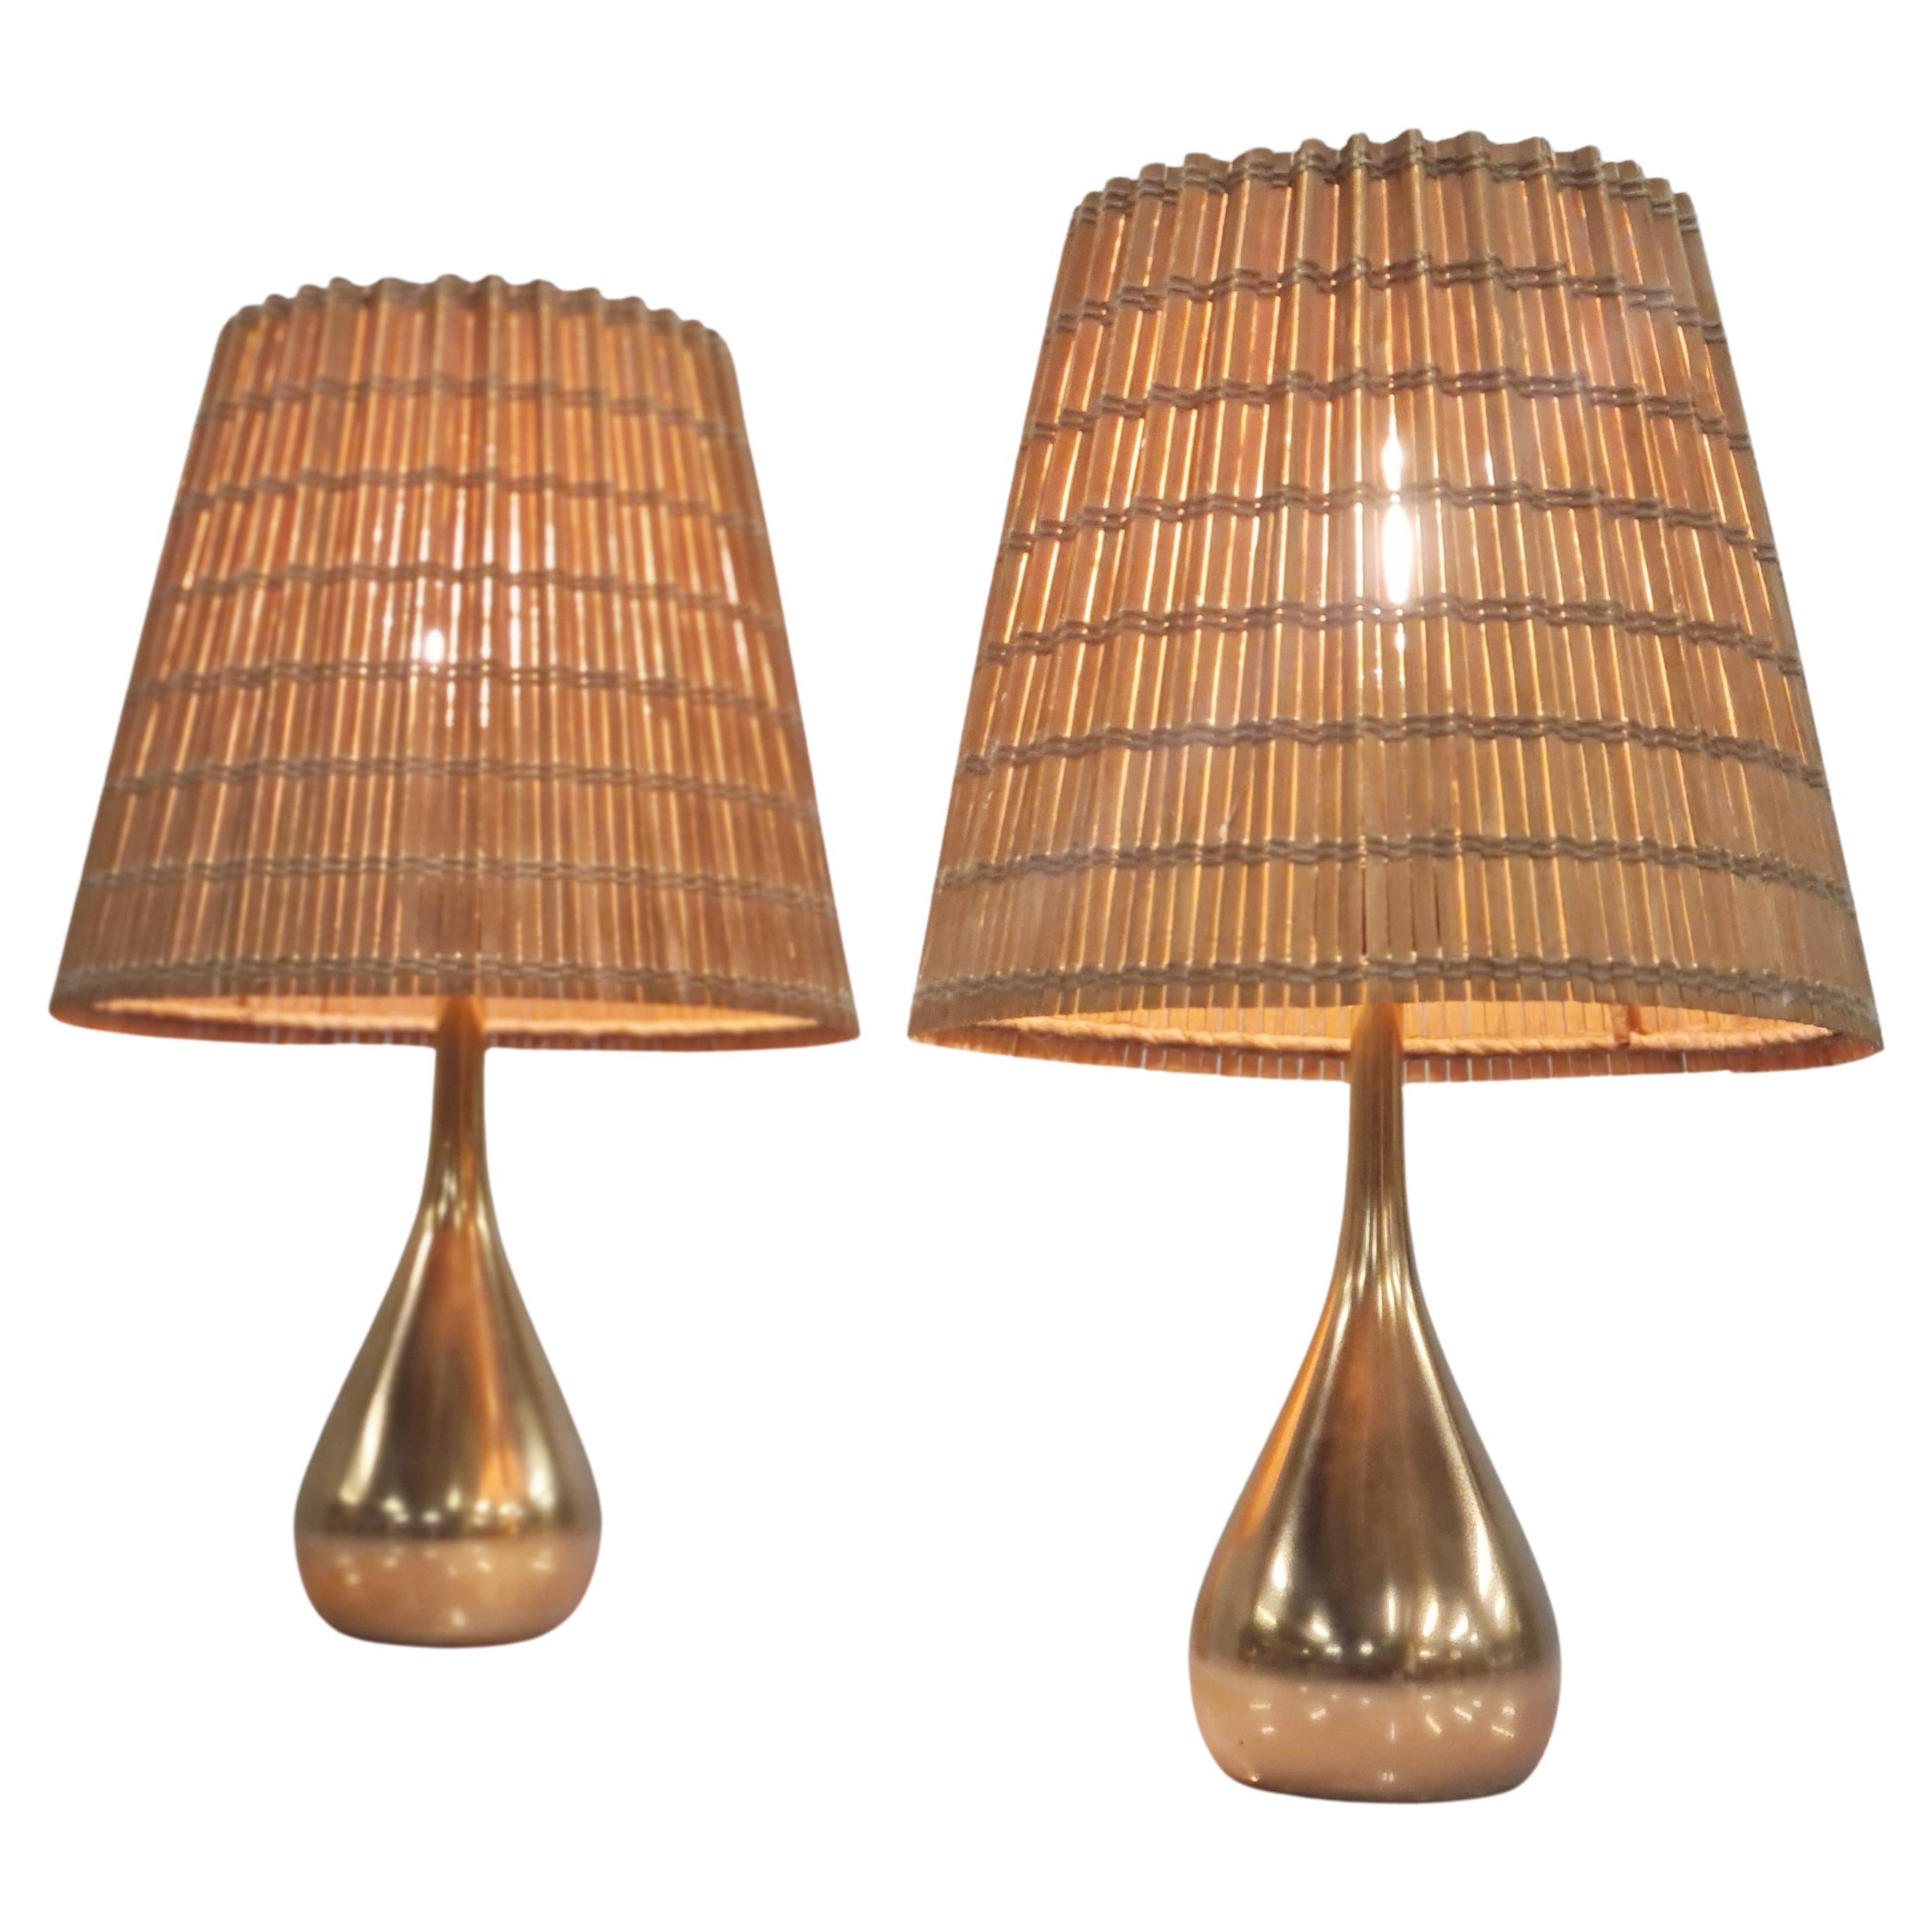 A Pair of Mauri Almari brass table lamps model K11-21, Idman.